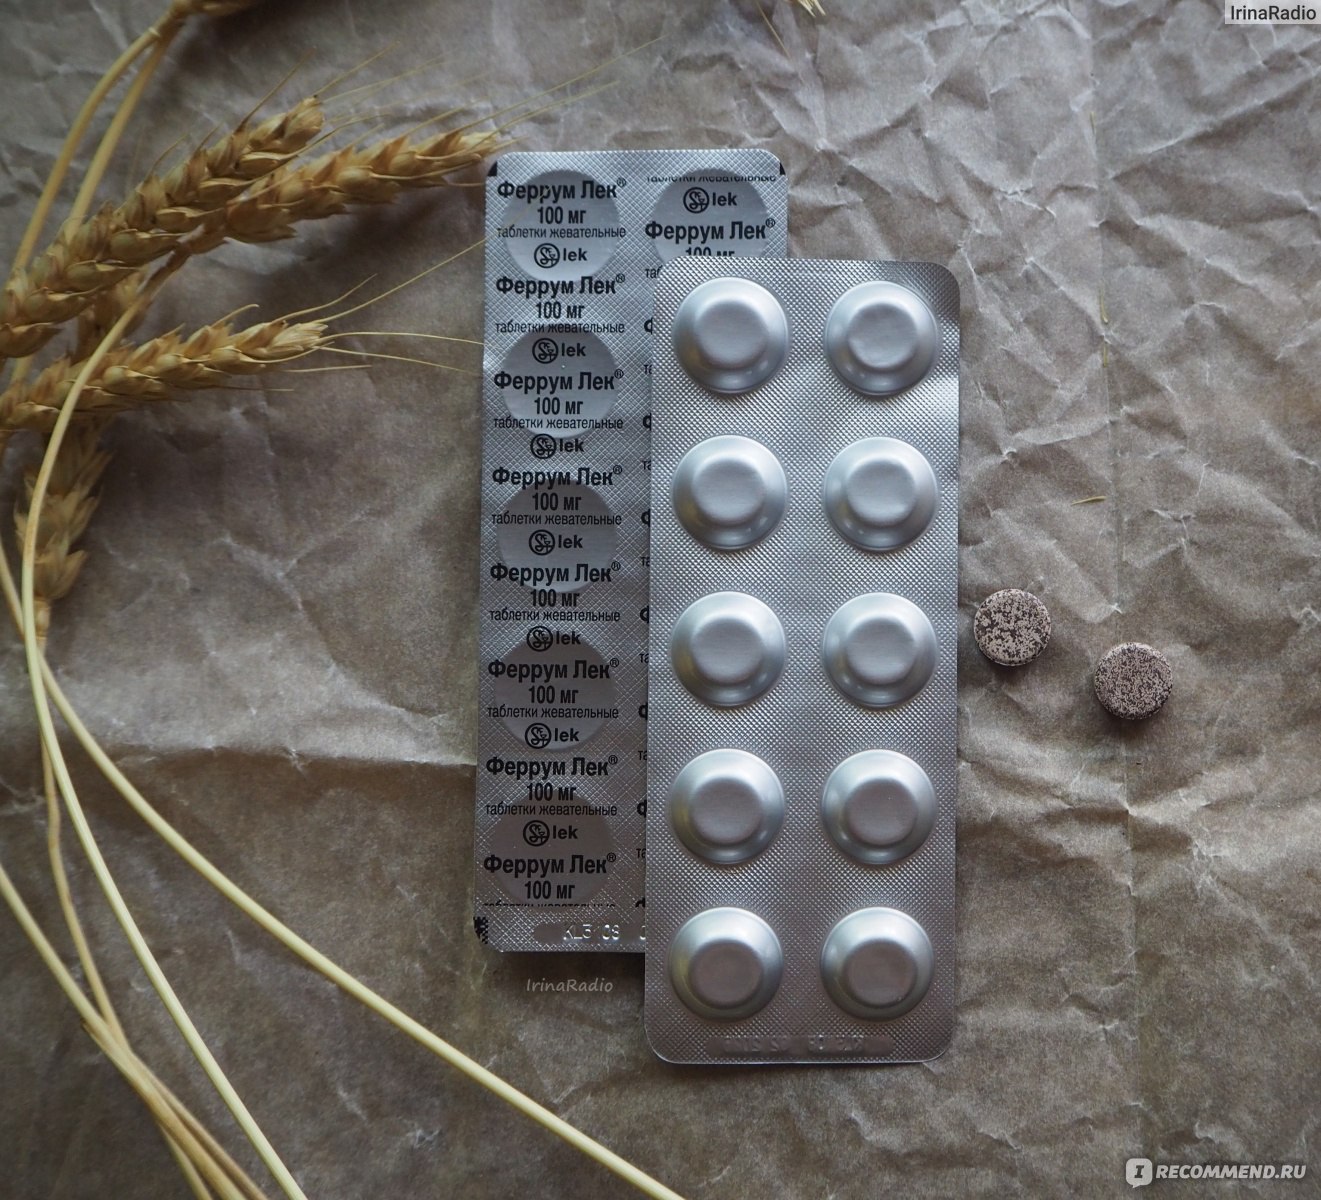 Феррум-лек таблетки аптека ру